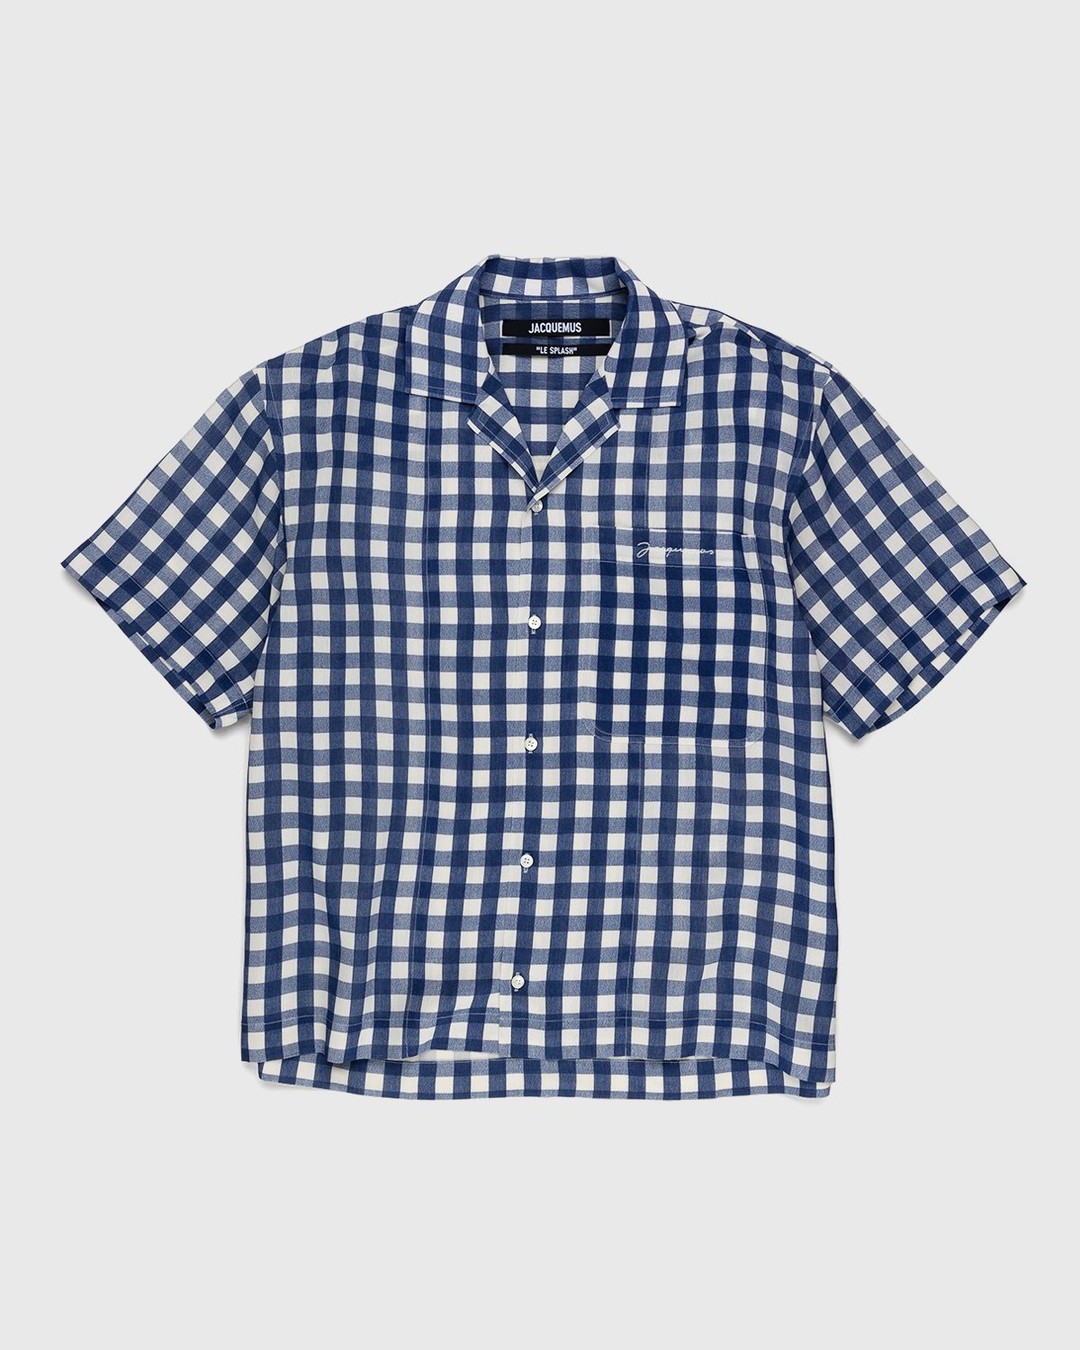 JACQUEMUS – La Chemise Jean Navy Checks - Shirts - Blue - Image 1